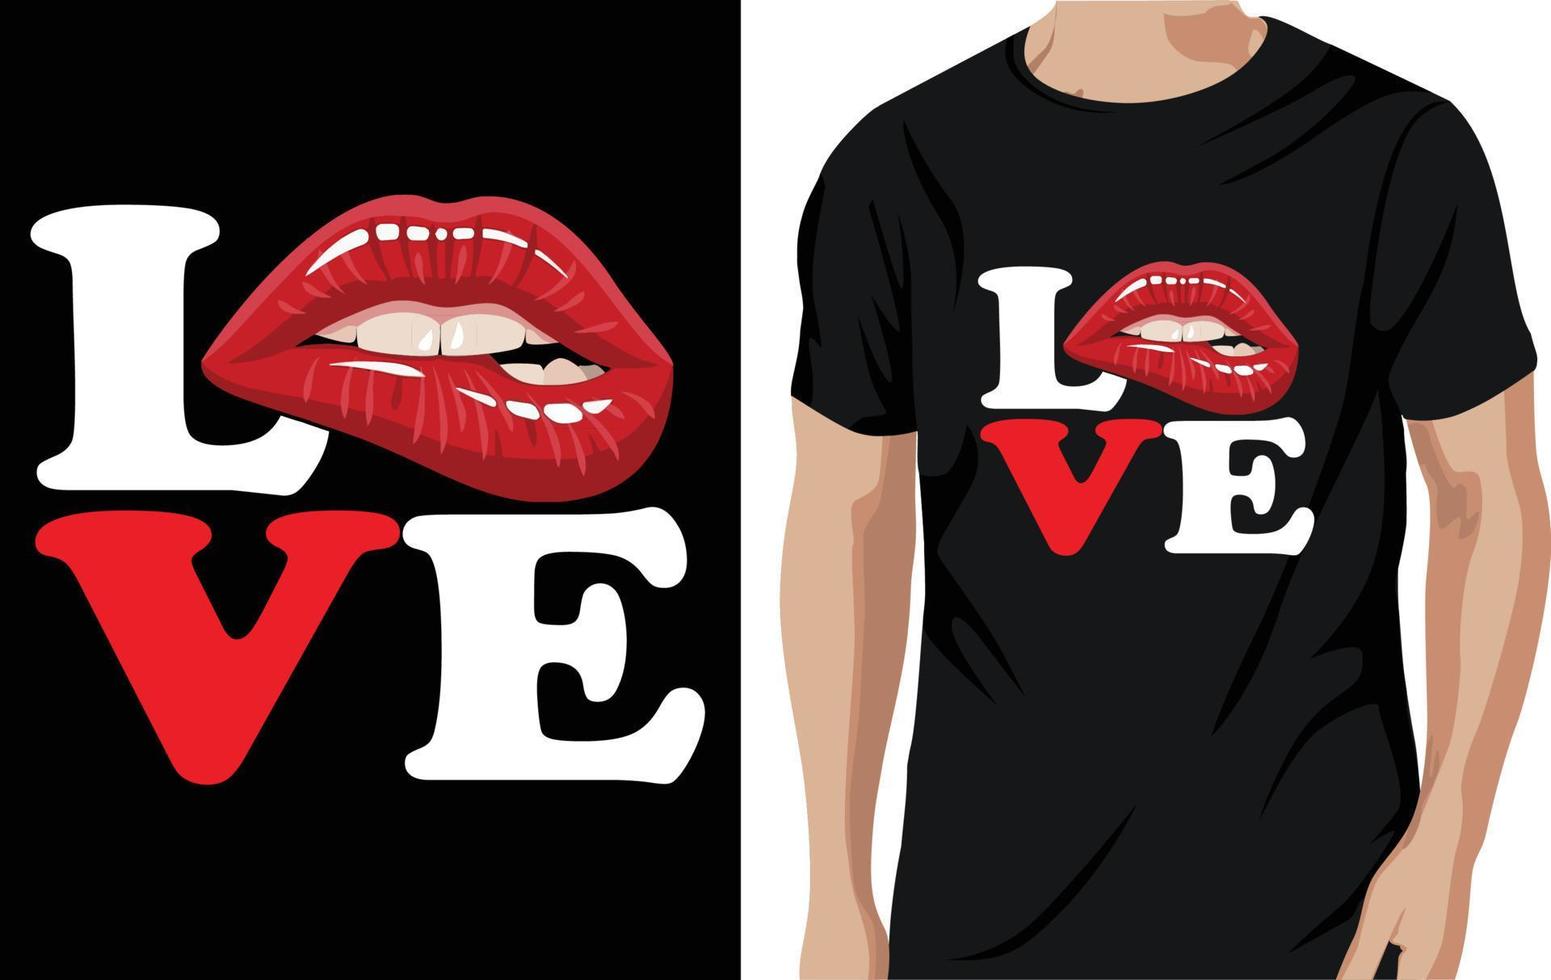 valentine t-shirt design vektor